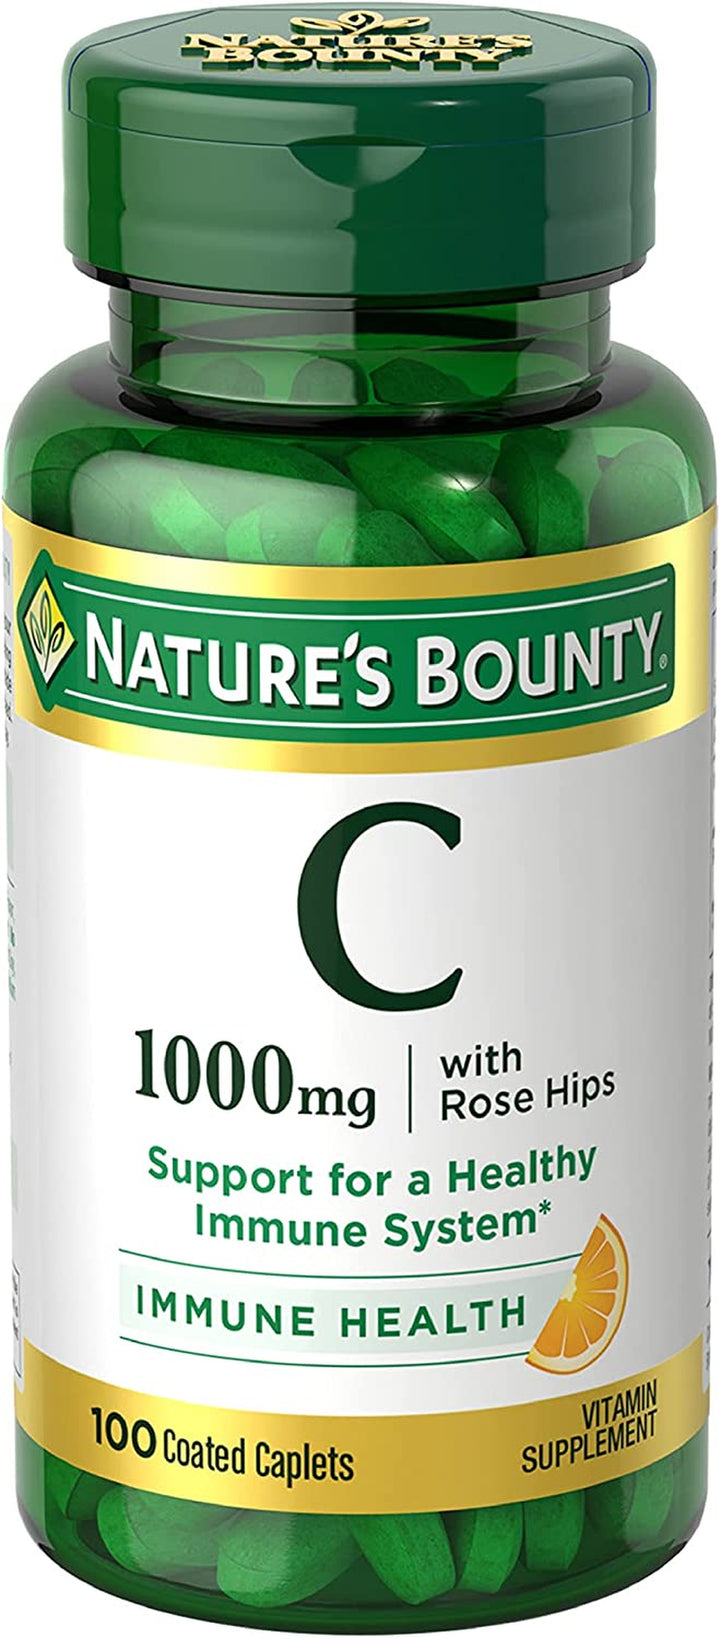 Nature'S Bounty Vitamin C, Supports Immune and Antioxidant Health, Vitamin C Supplement, 1000Mg, 300 Caplets